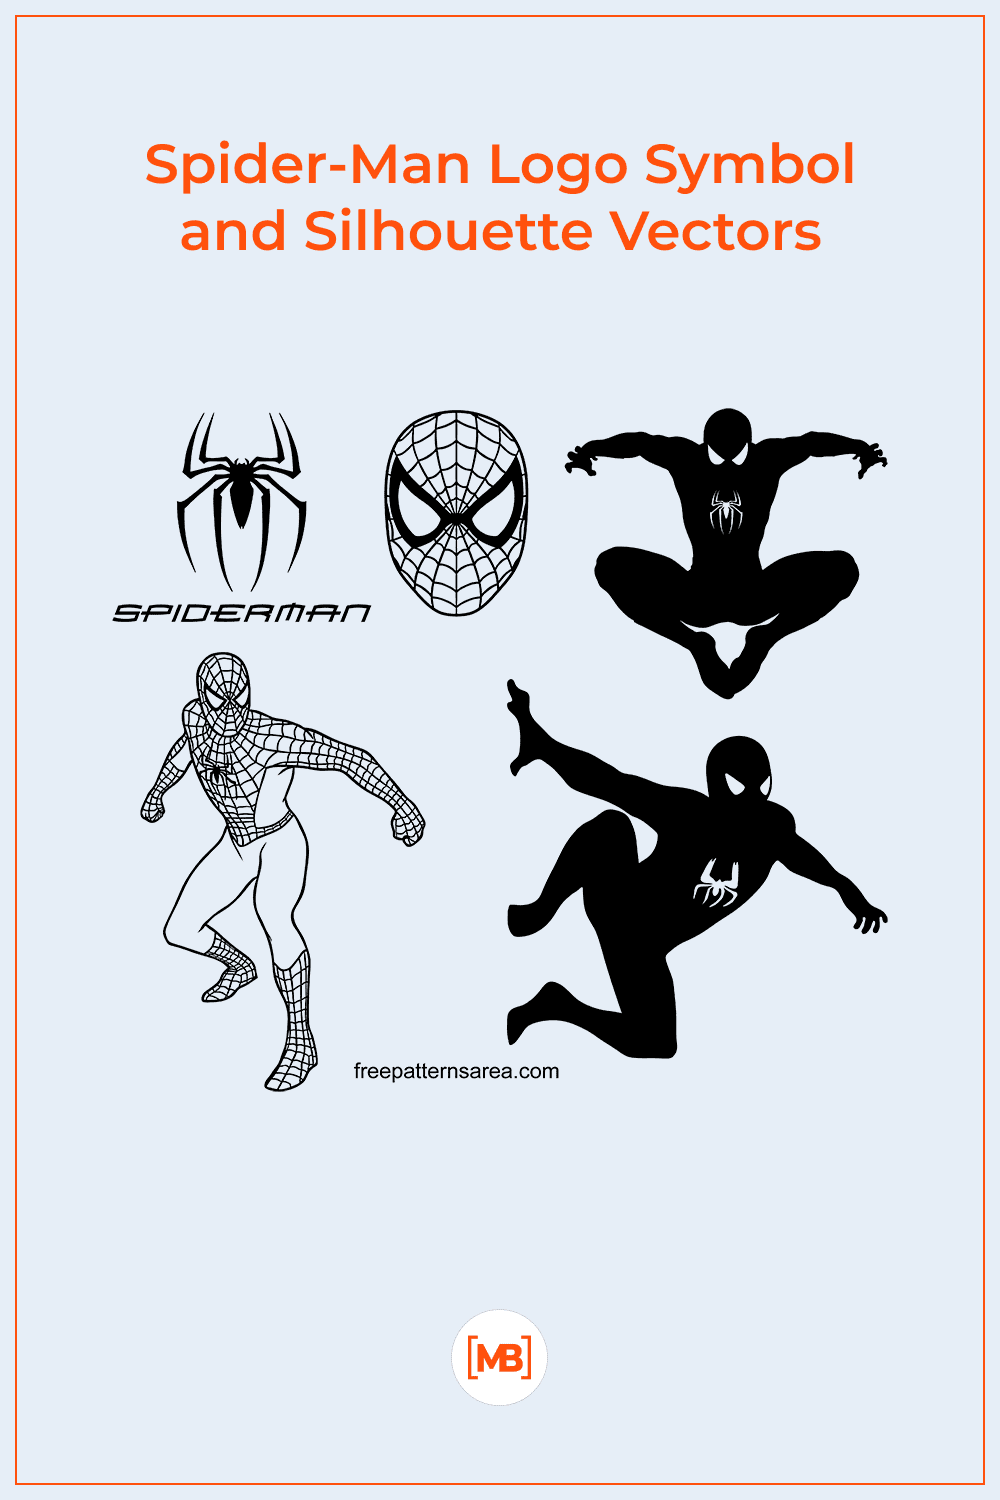 Spider-Man Logo Symbol and Silhouette Vectors.